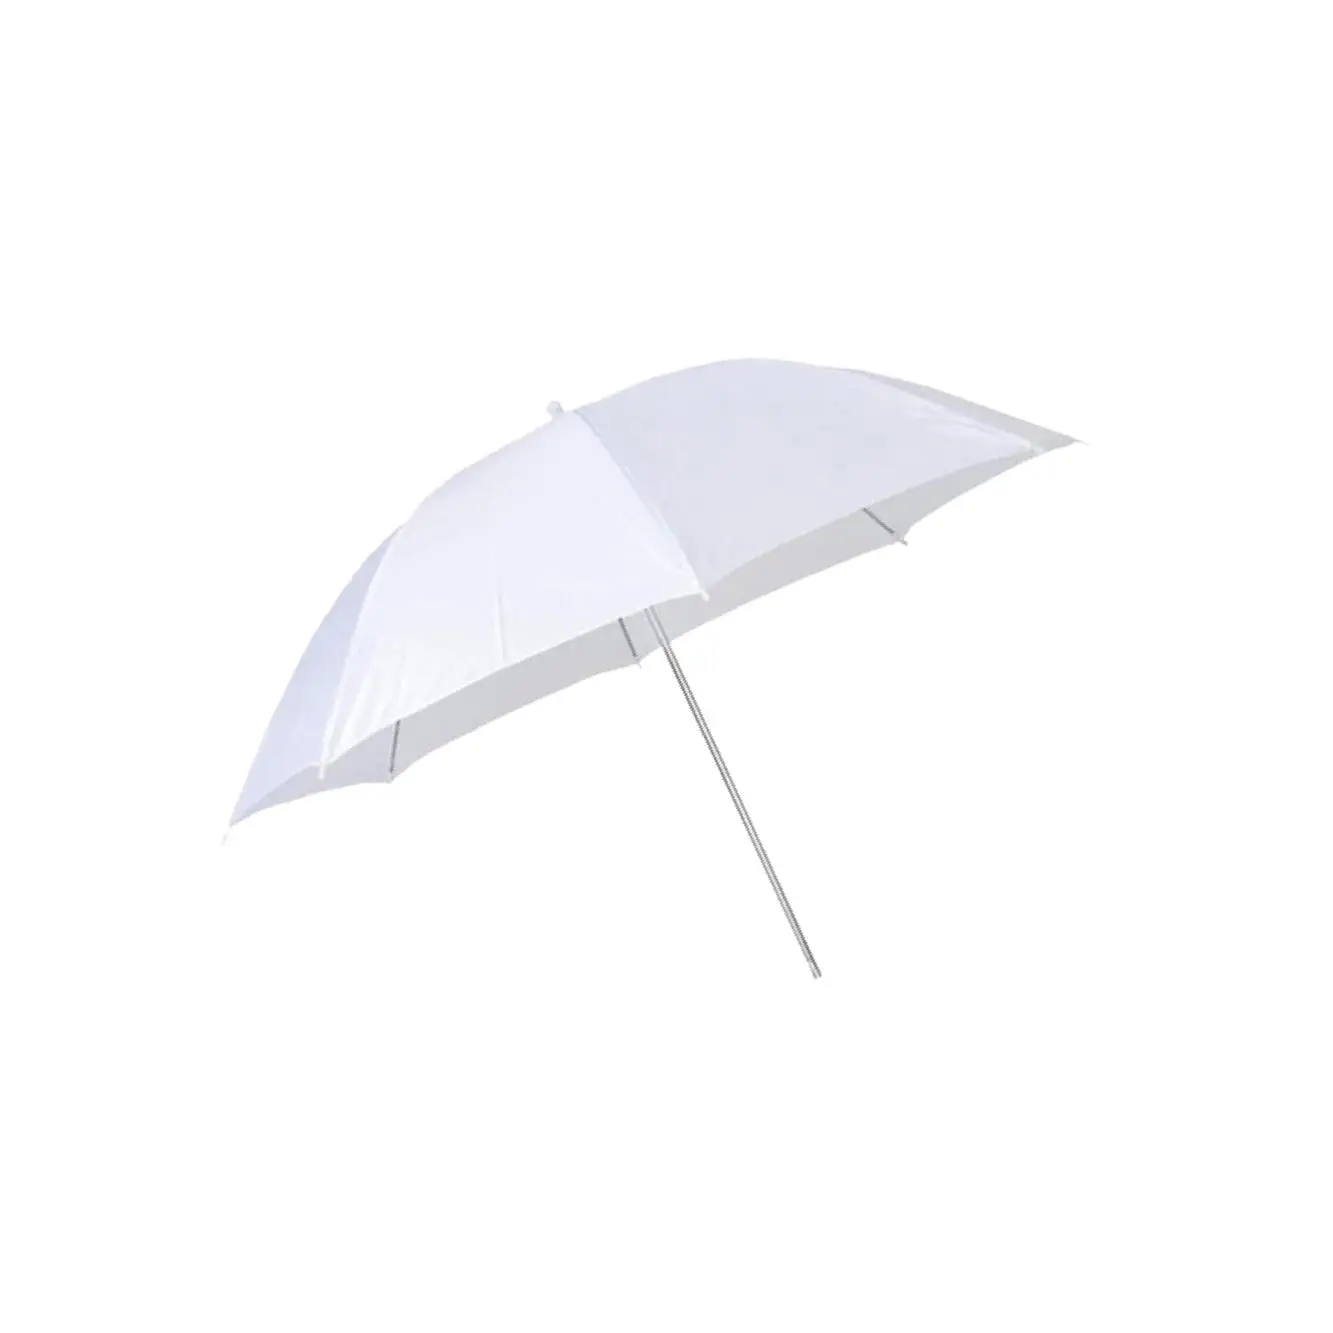 Studio Photo Flash Diffuser Translucent Soft Light White Umbrella 33inch